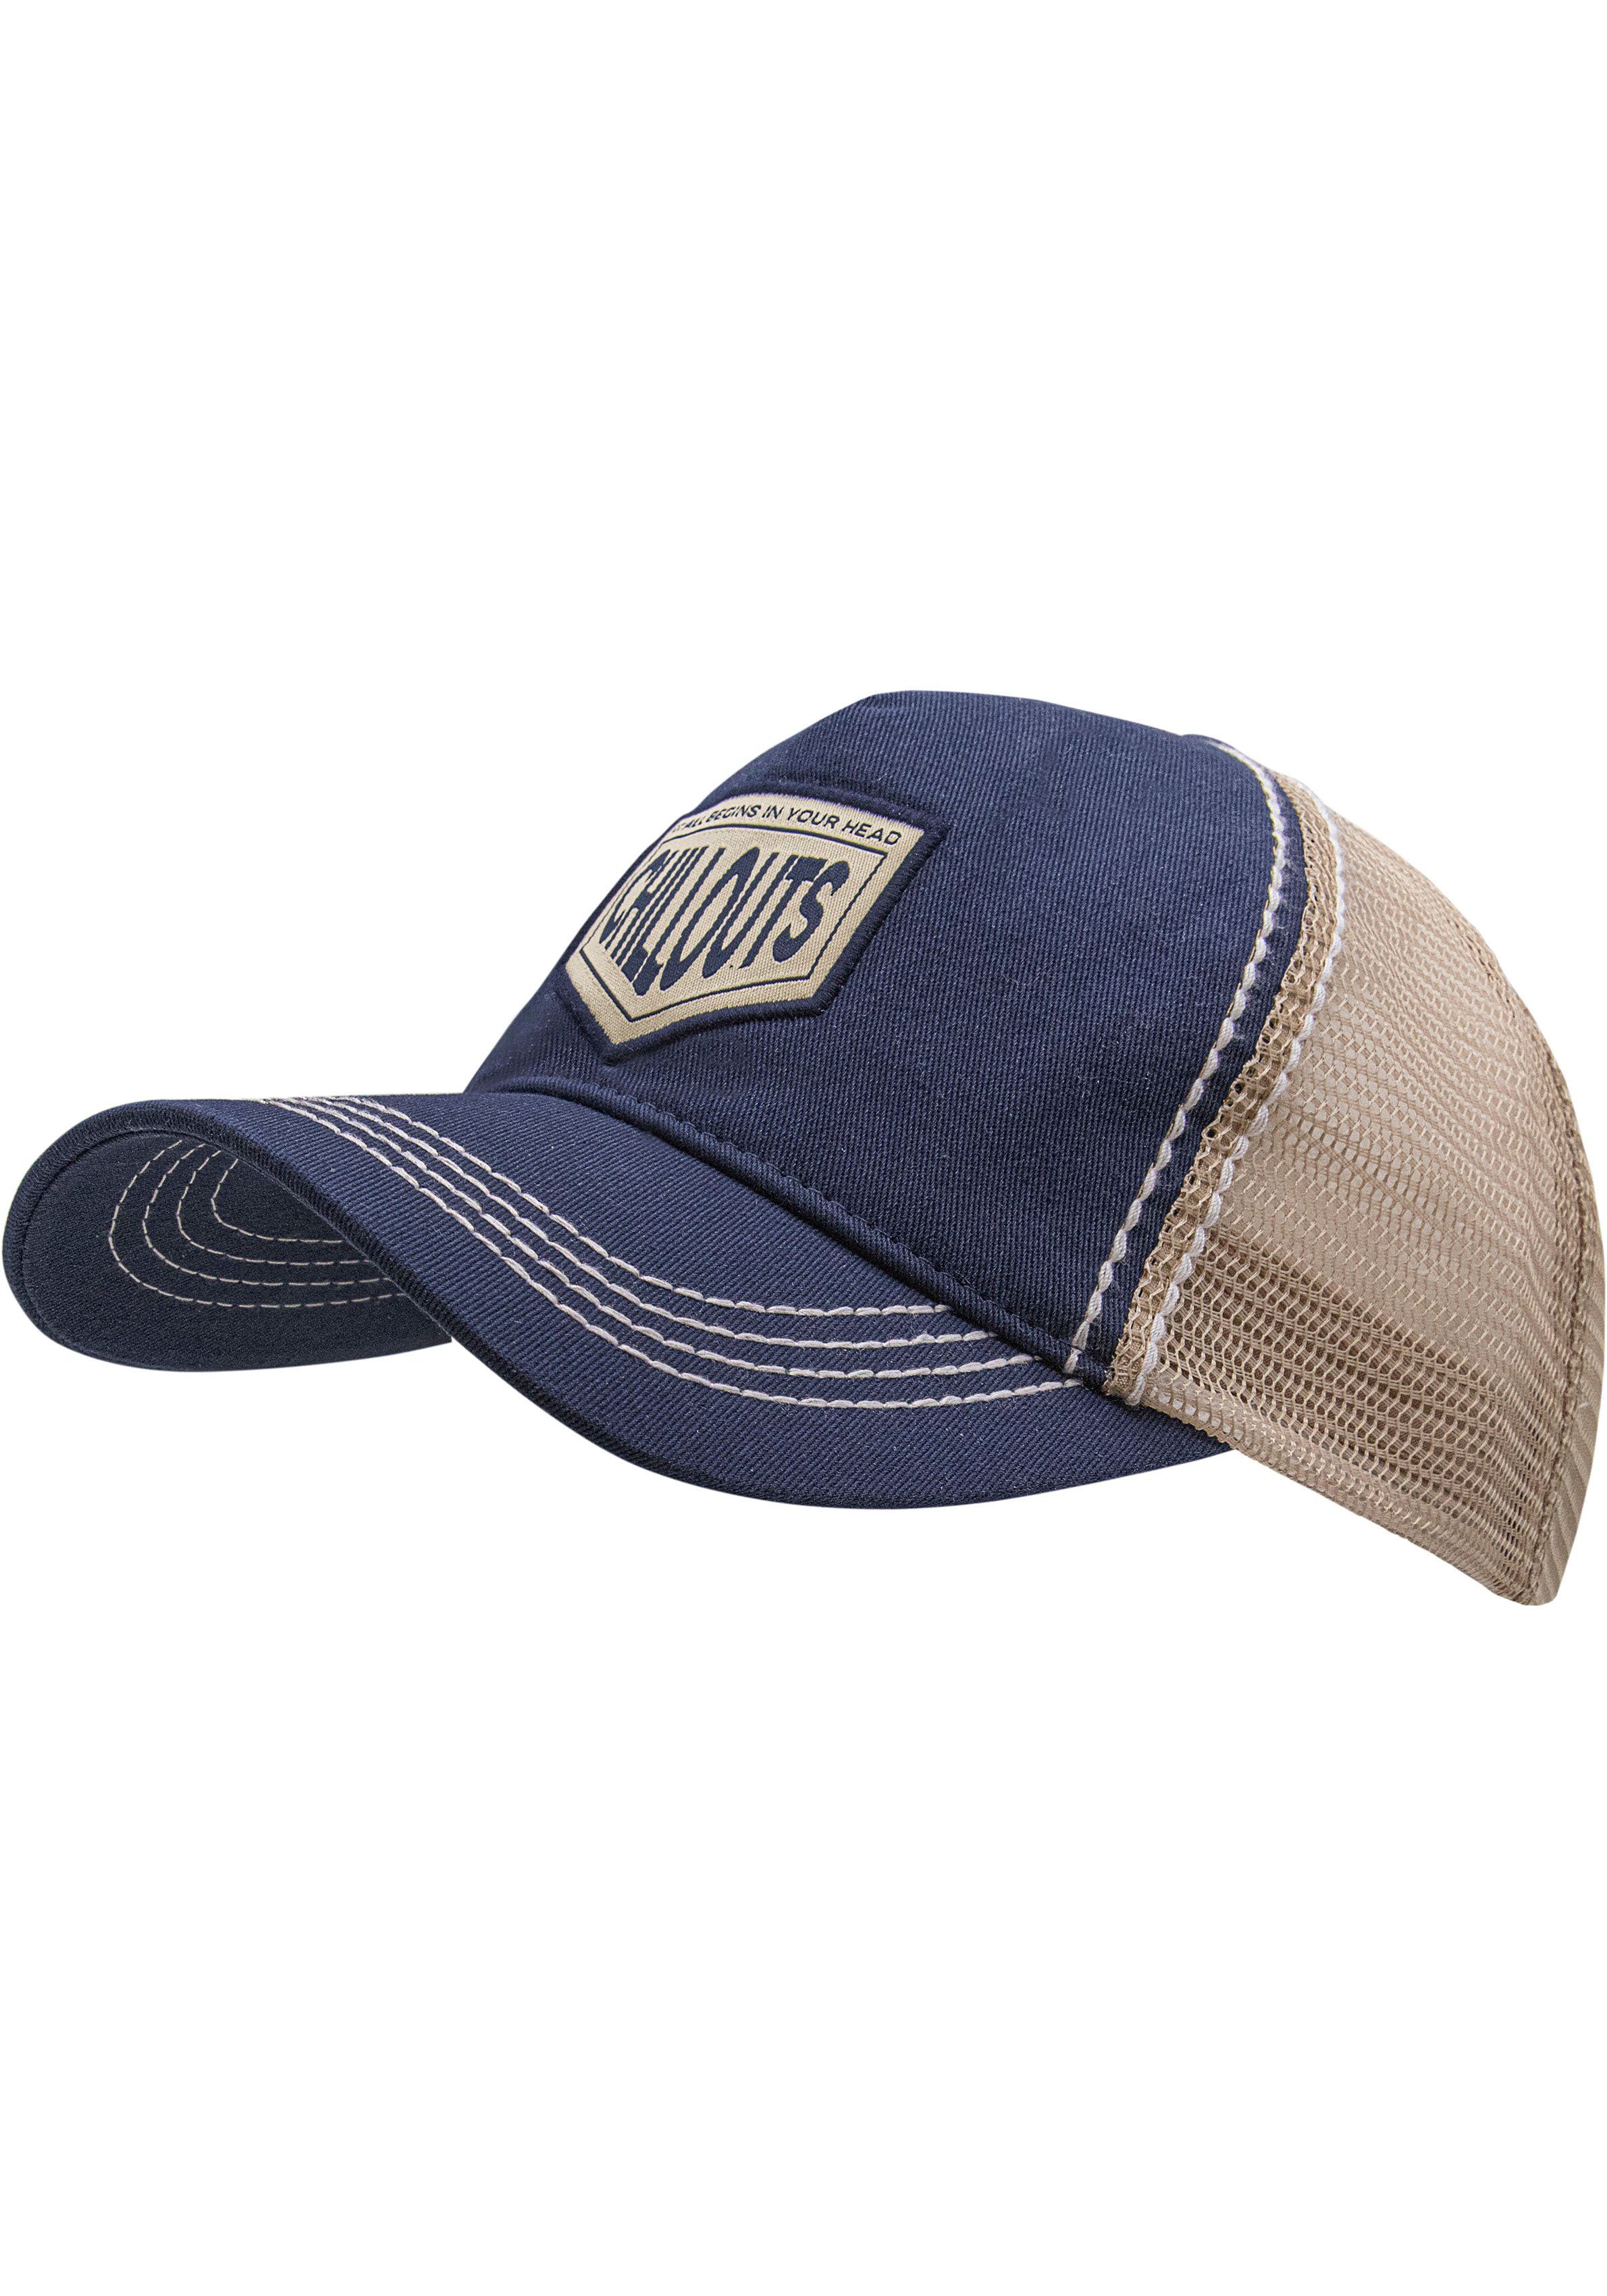 Baseball Hat chillouts Cap Portsmouth marine